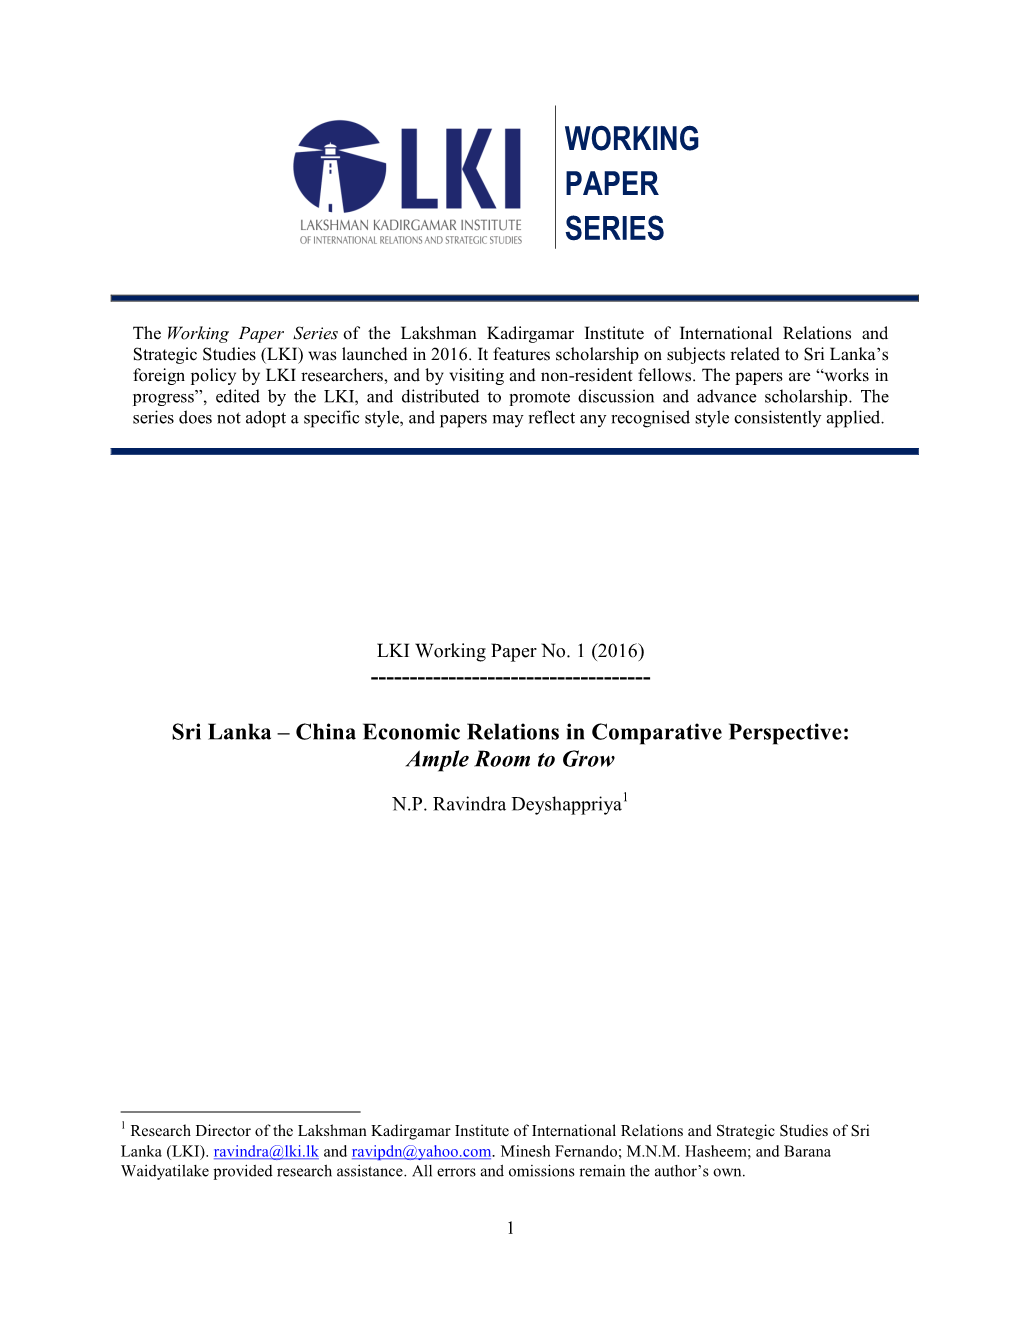 Working Paper Series of the Lakshman Kadirgamar Institute of International Relations and Strategic Studies (LKI) Was Launched in 2016